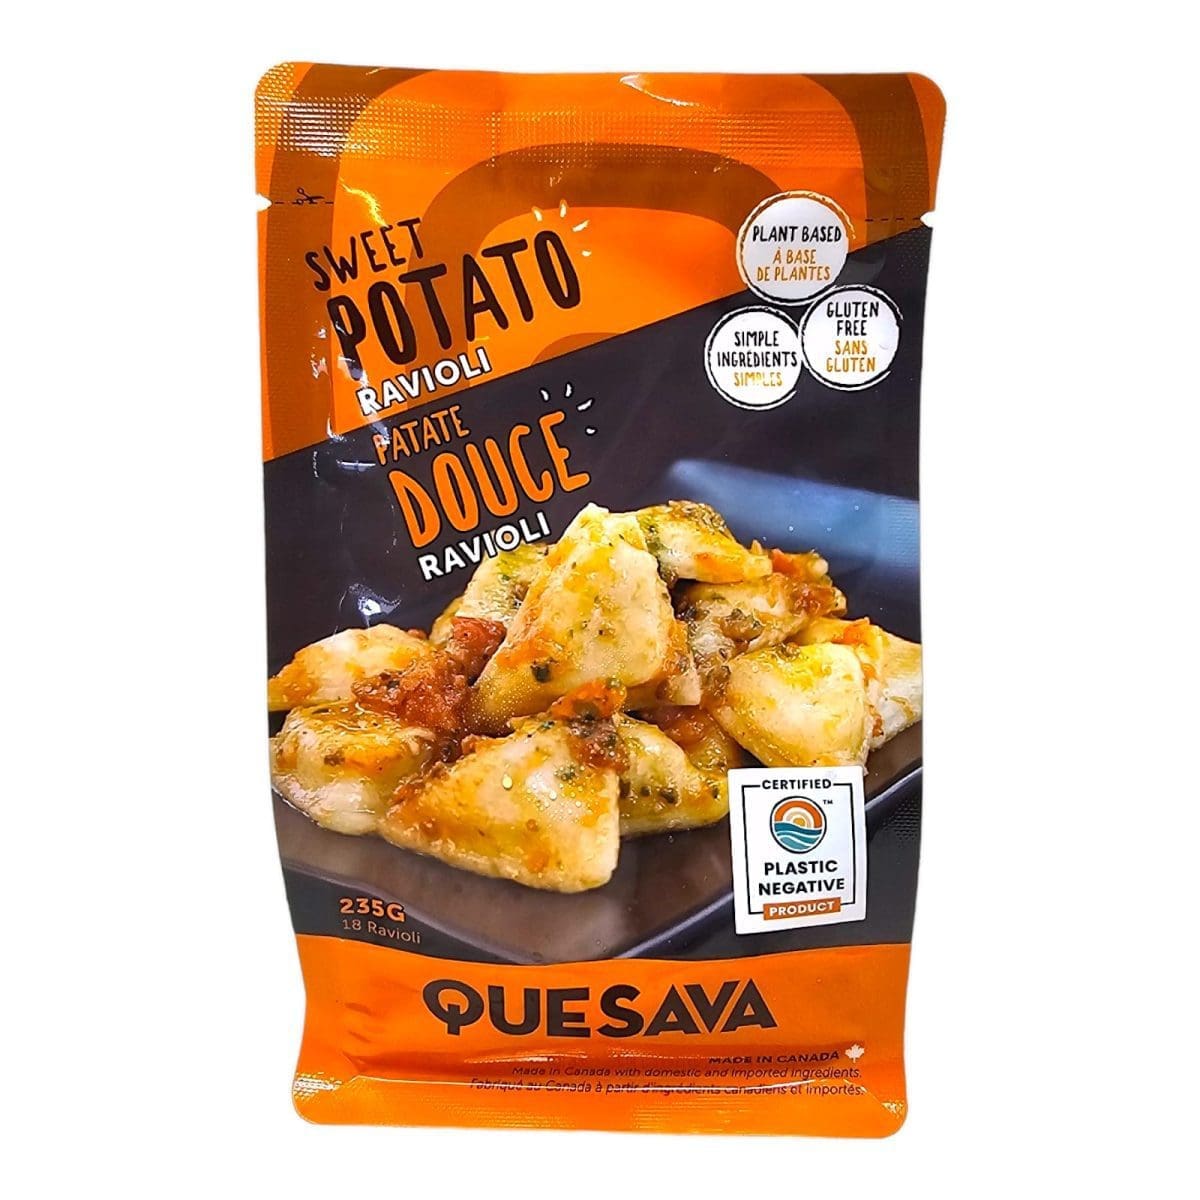 Quesava Plant Based Sweet Potato Ravioli